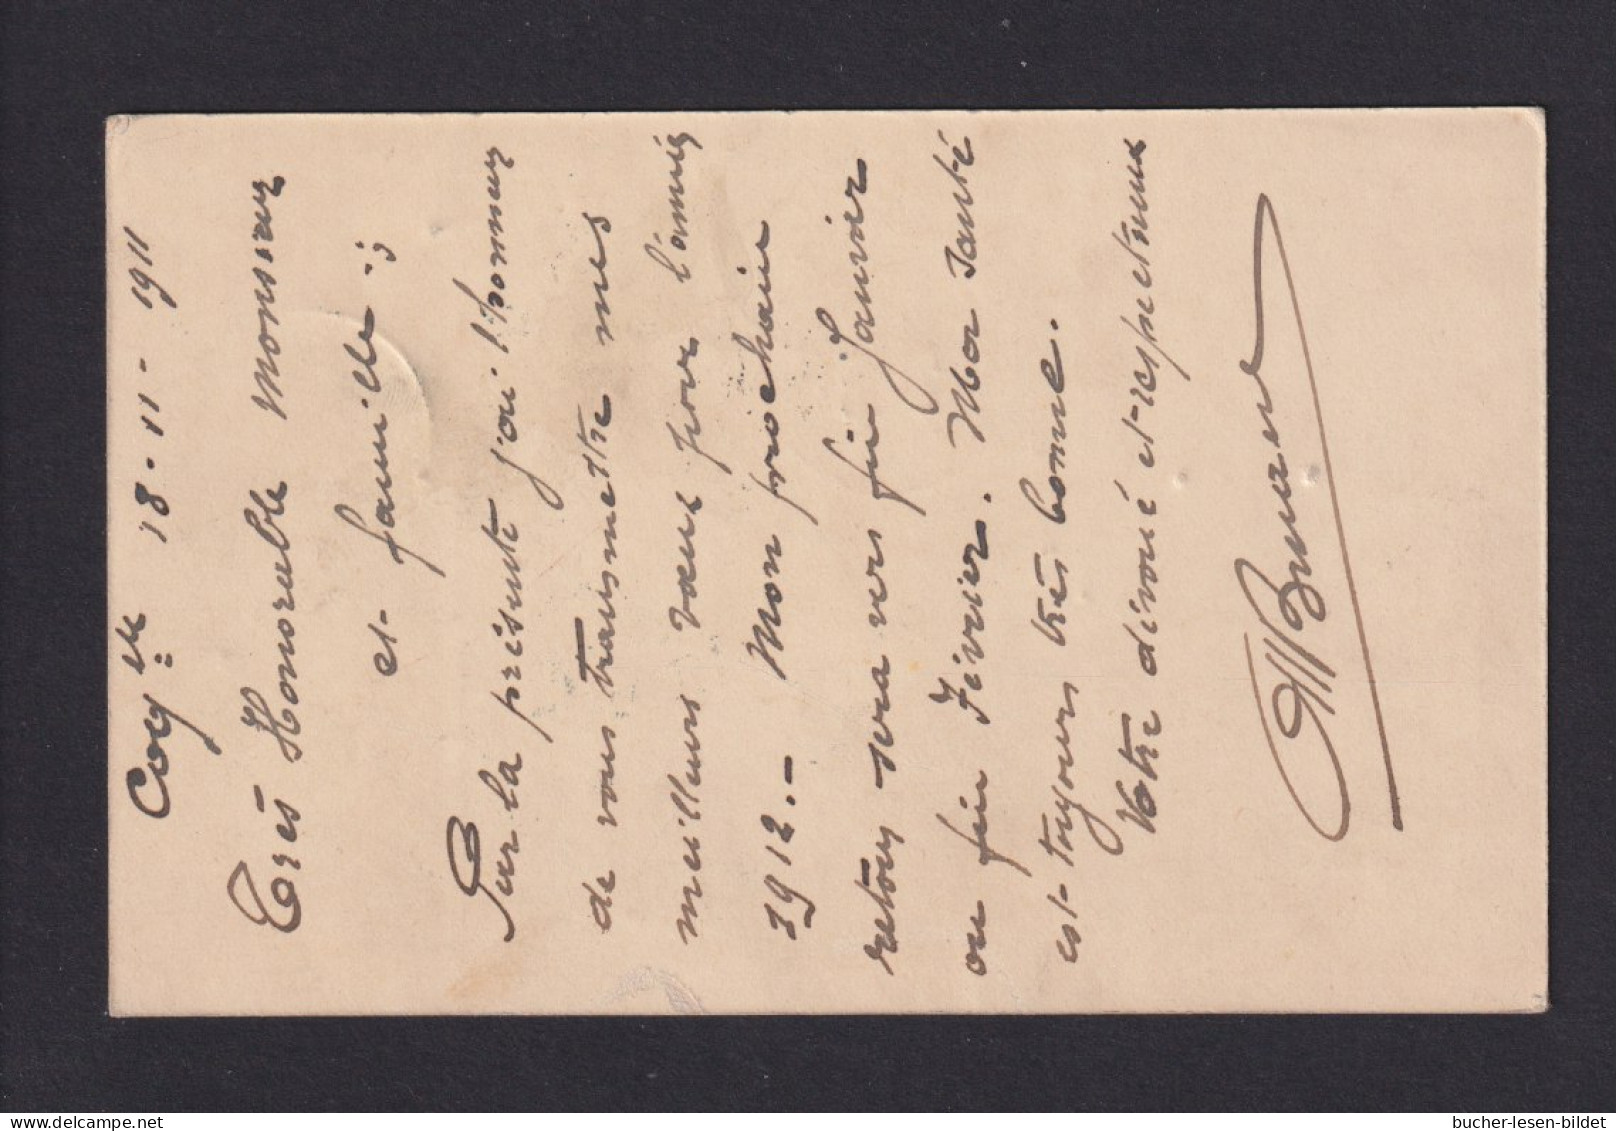 1911 - 10 C. Ganzsache Ab COQUILHATVILLE Nach Belgien - Brieven En Documenten